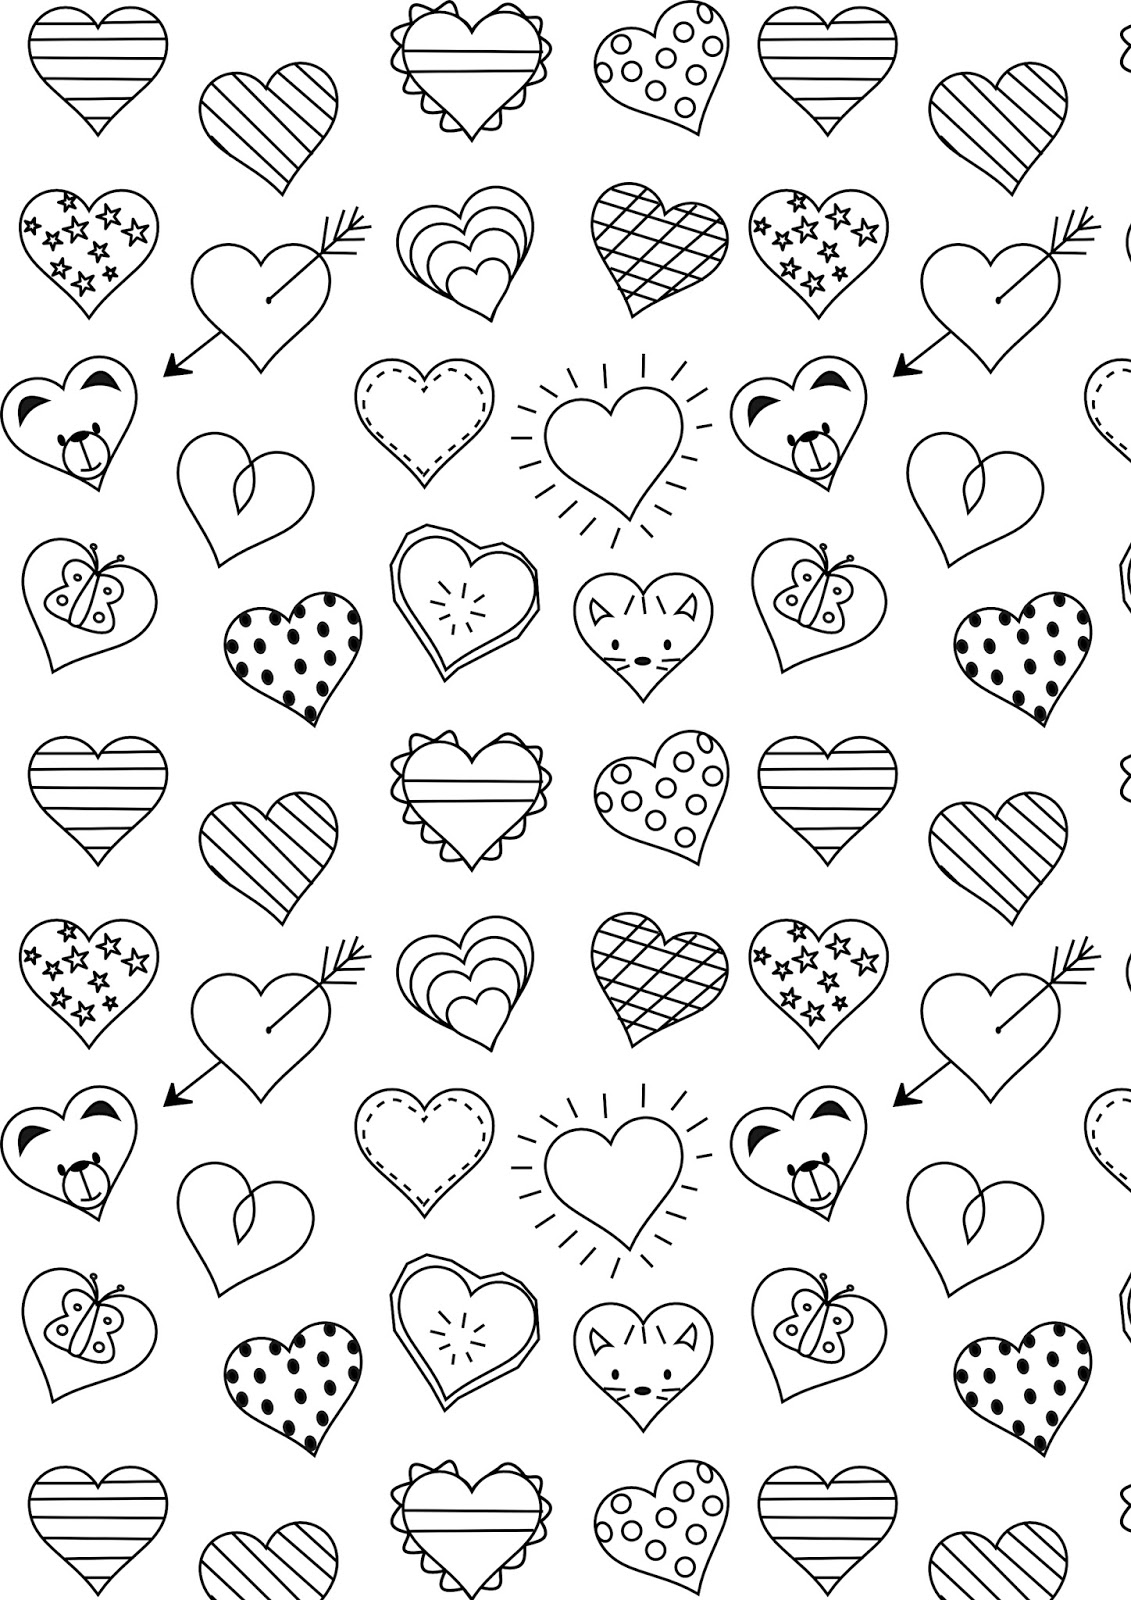 MeinLilaPark: Free printable heart coloring page - ausdruckbare